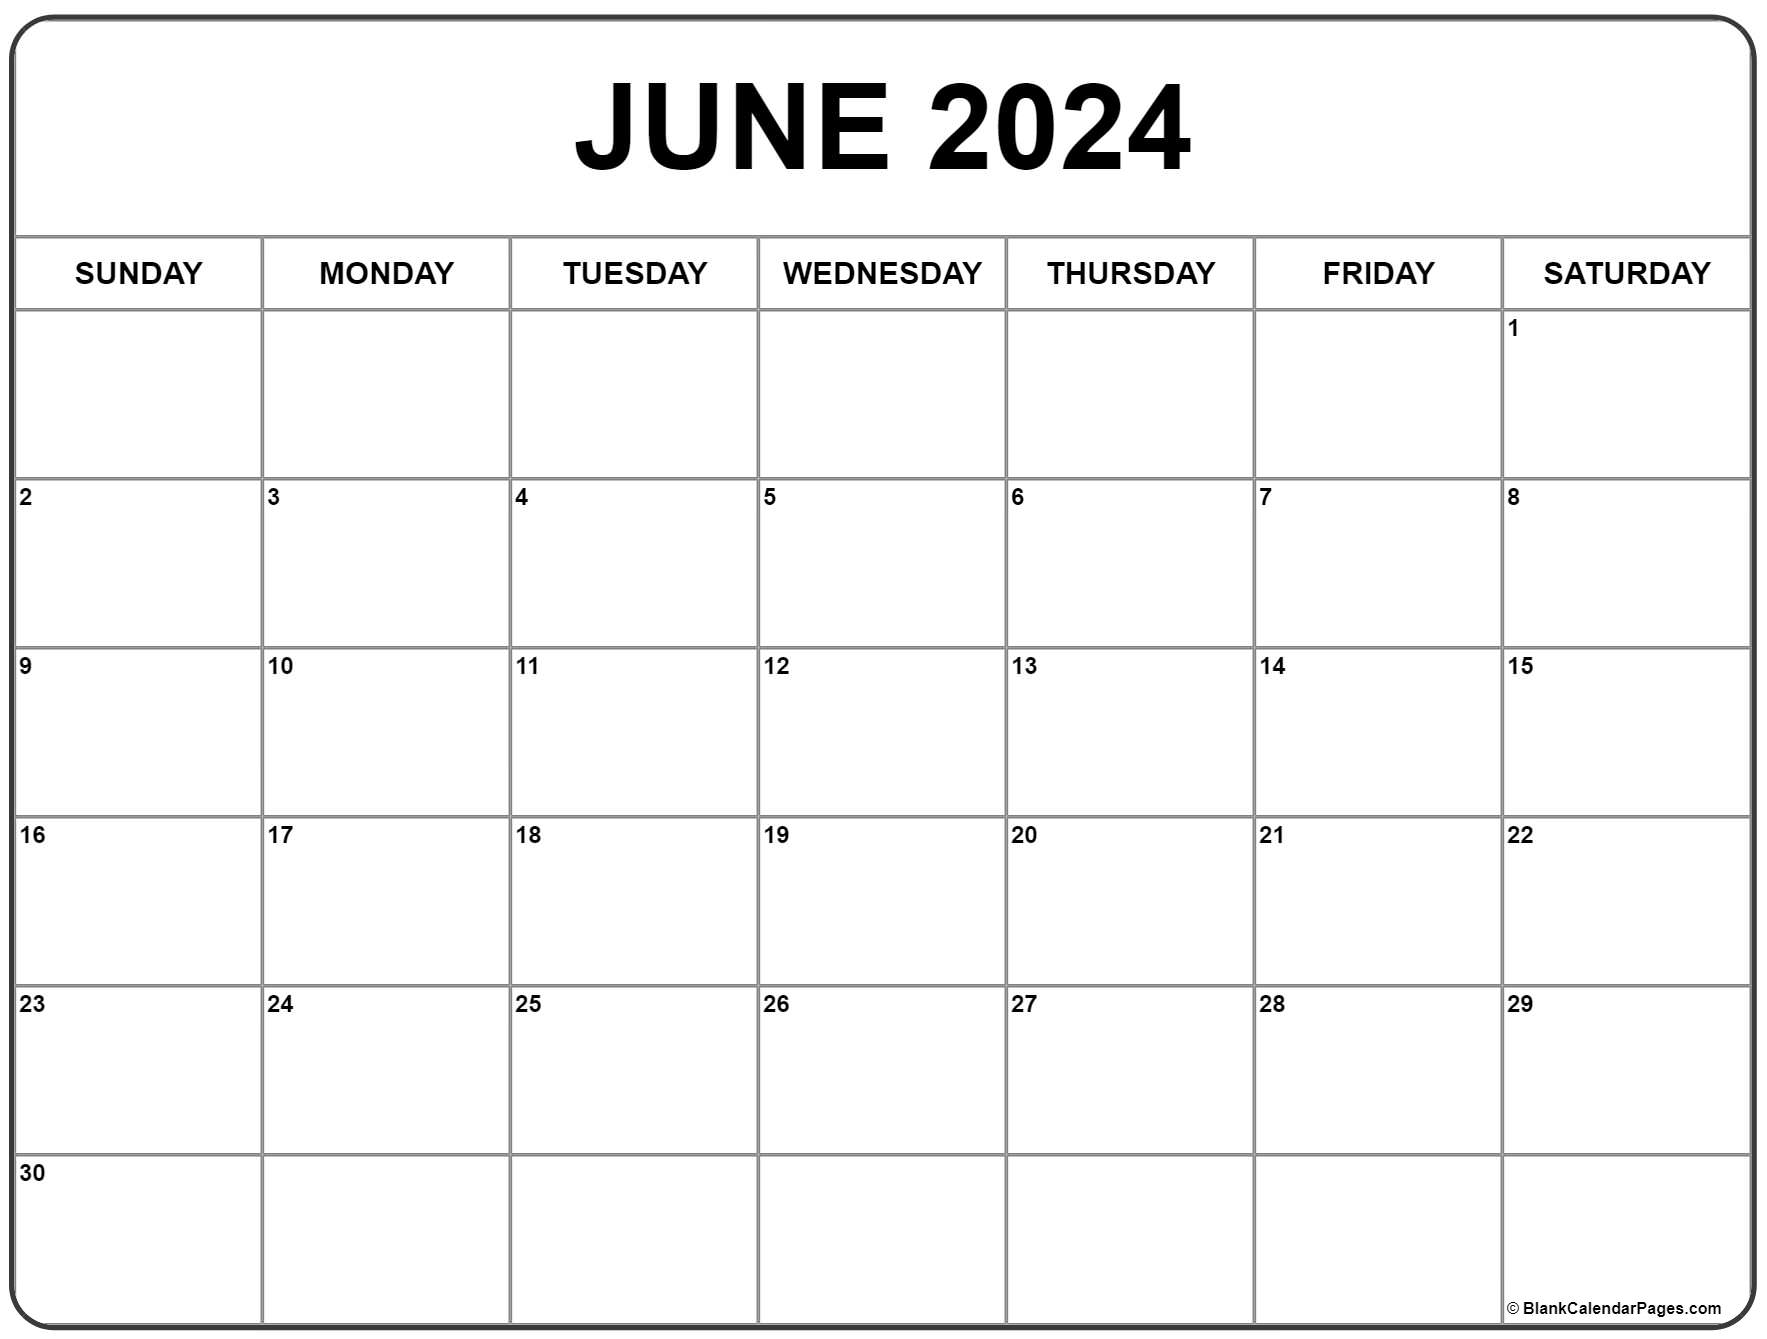 June 2024 Calendar | Free Printable Calendar for Monthly Calendar June 2024 Printable